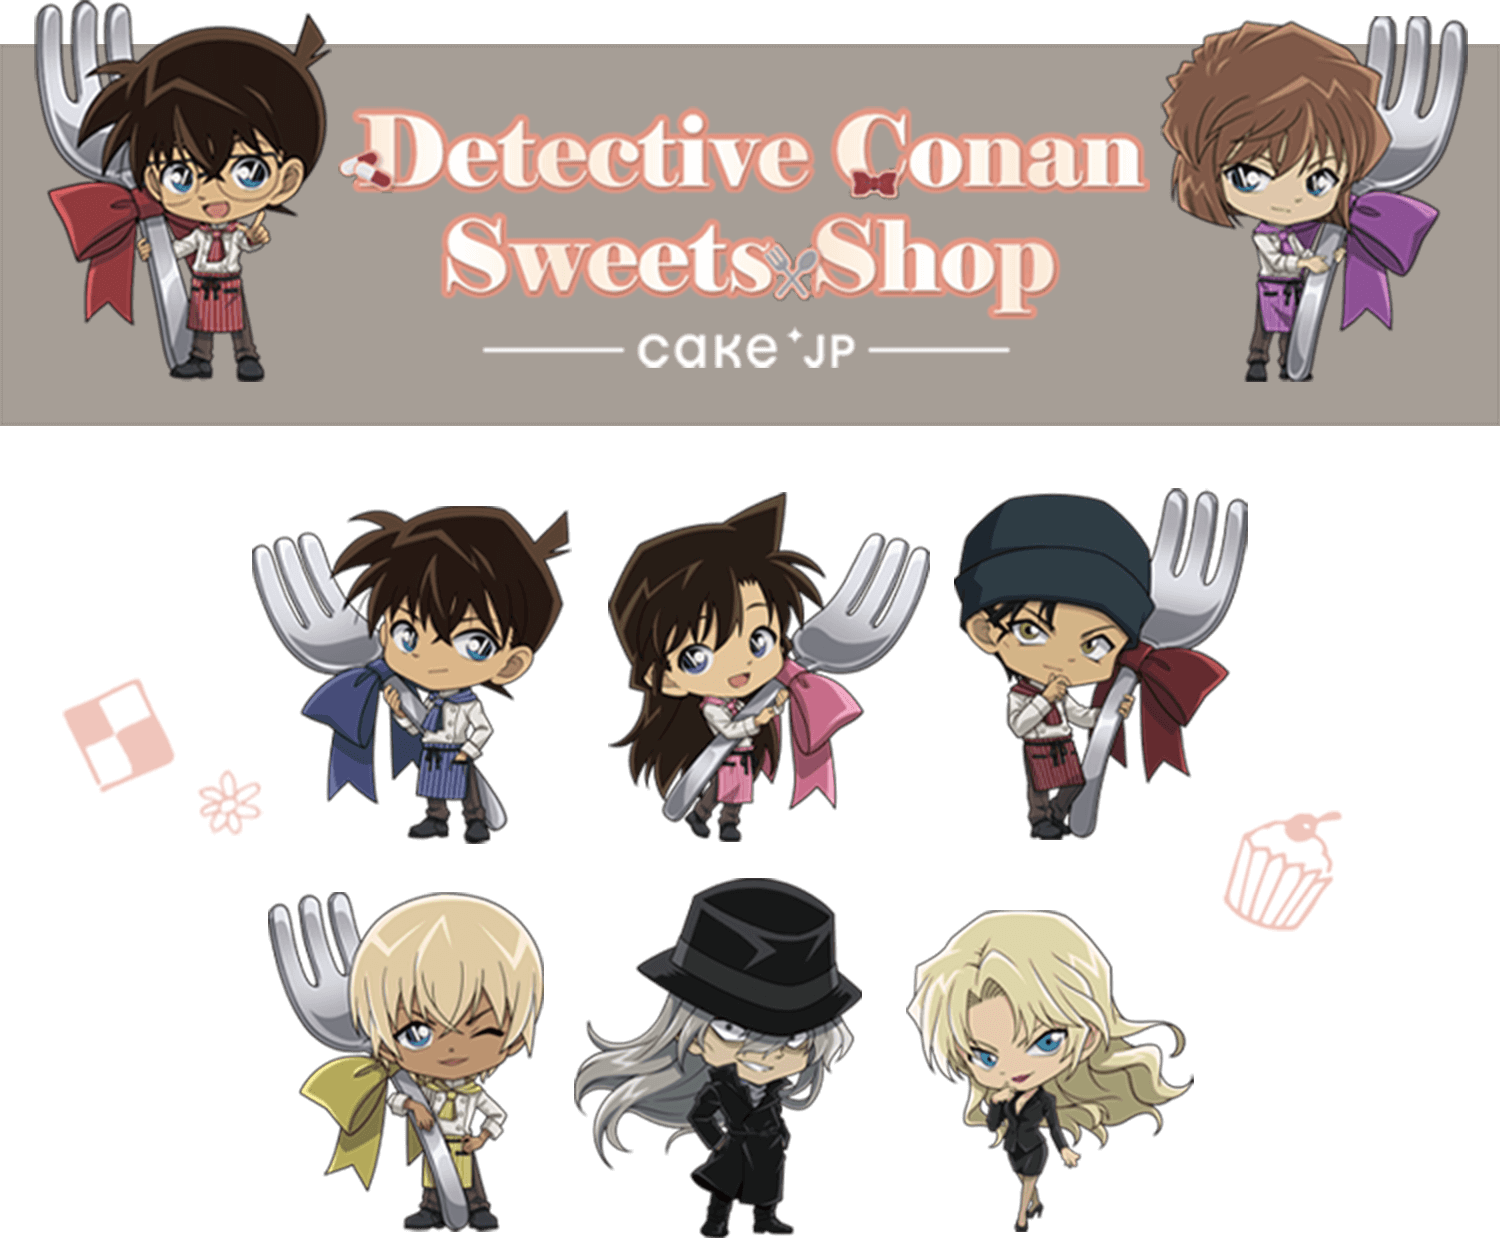 Detective Conan Sweets Shop